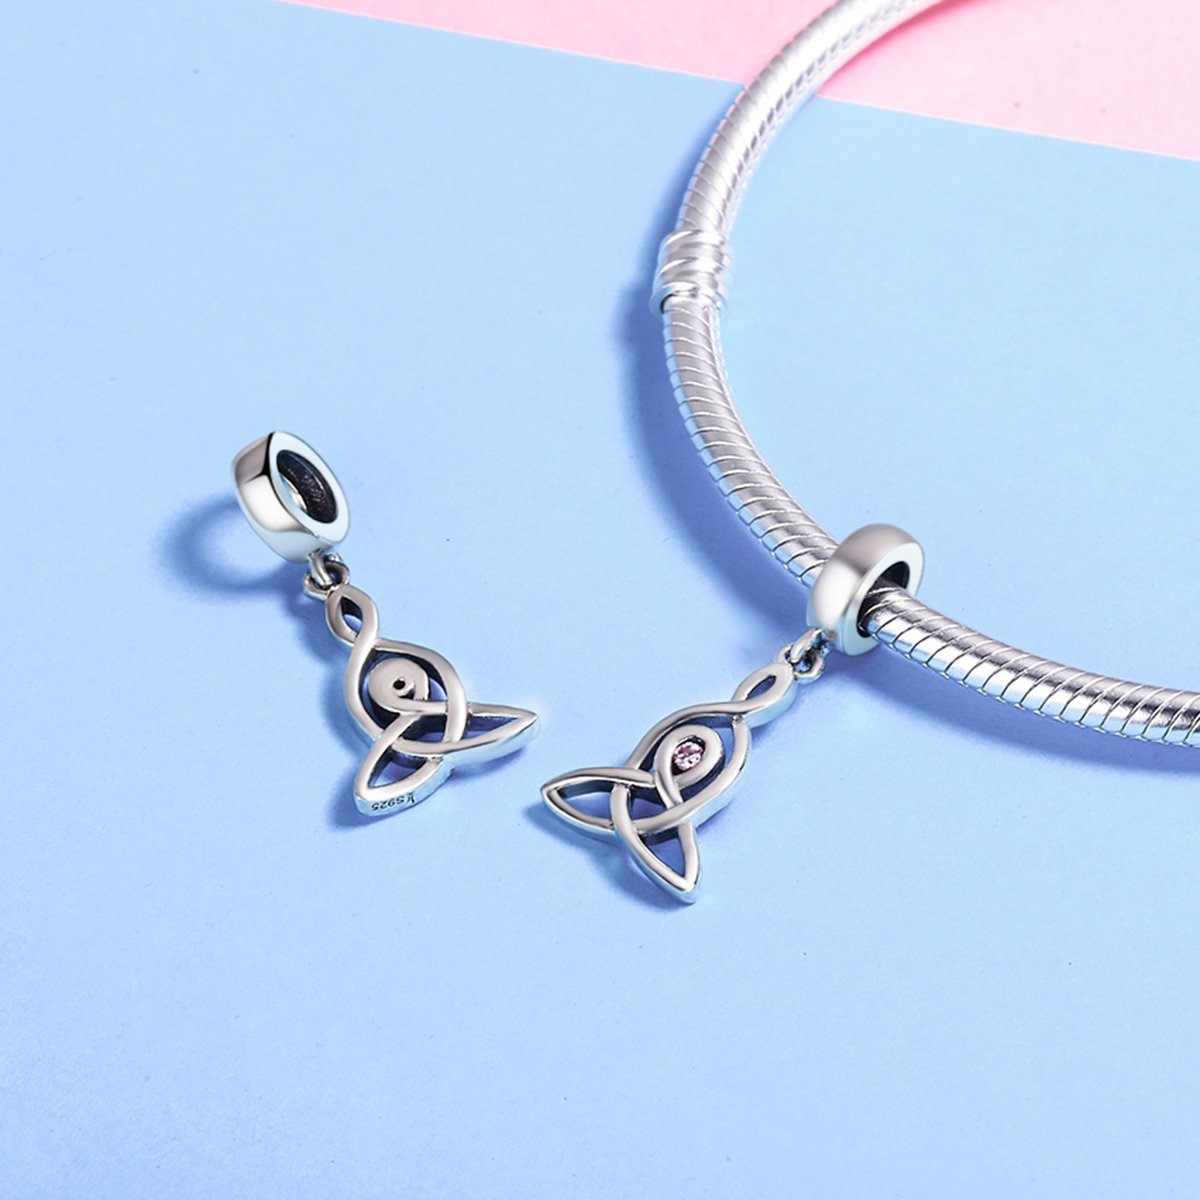 Sterling 925 silver charm the fish bead pendant fits Pandora charm and European charm bracelet Xaxe.com